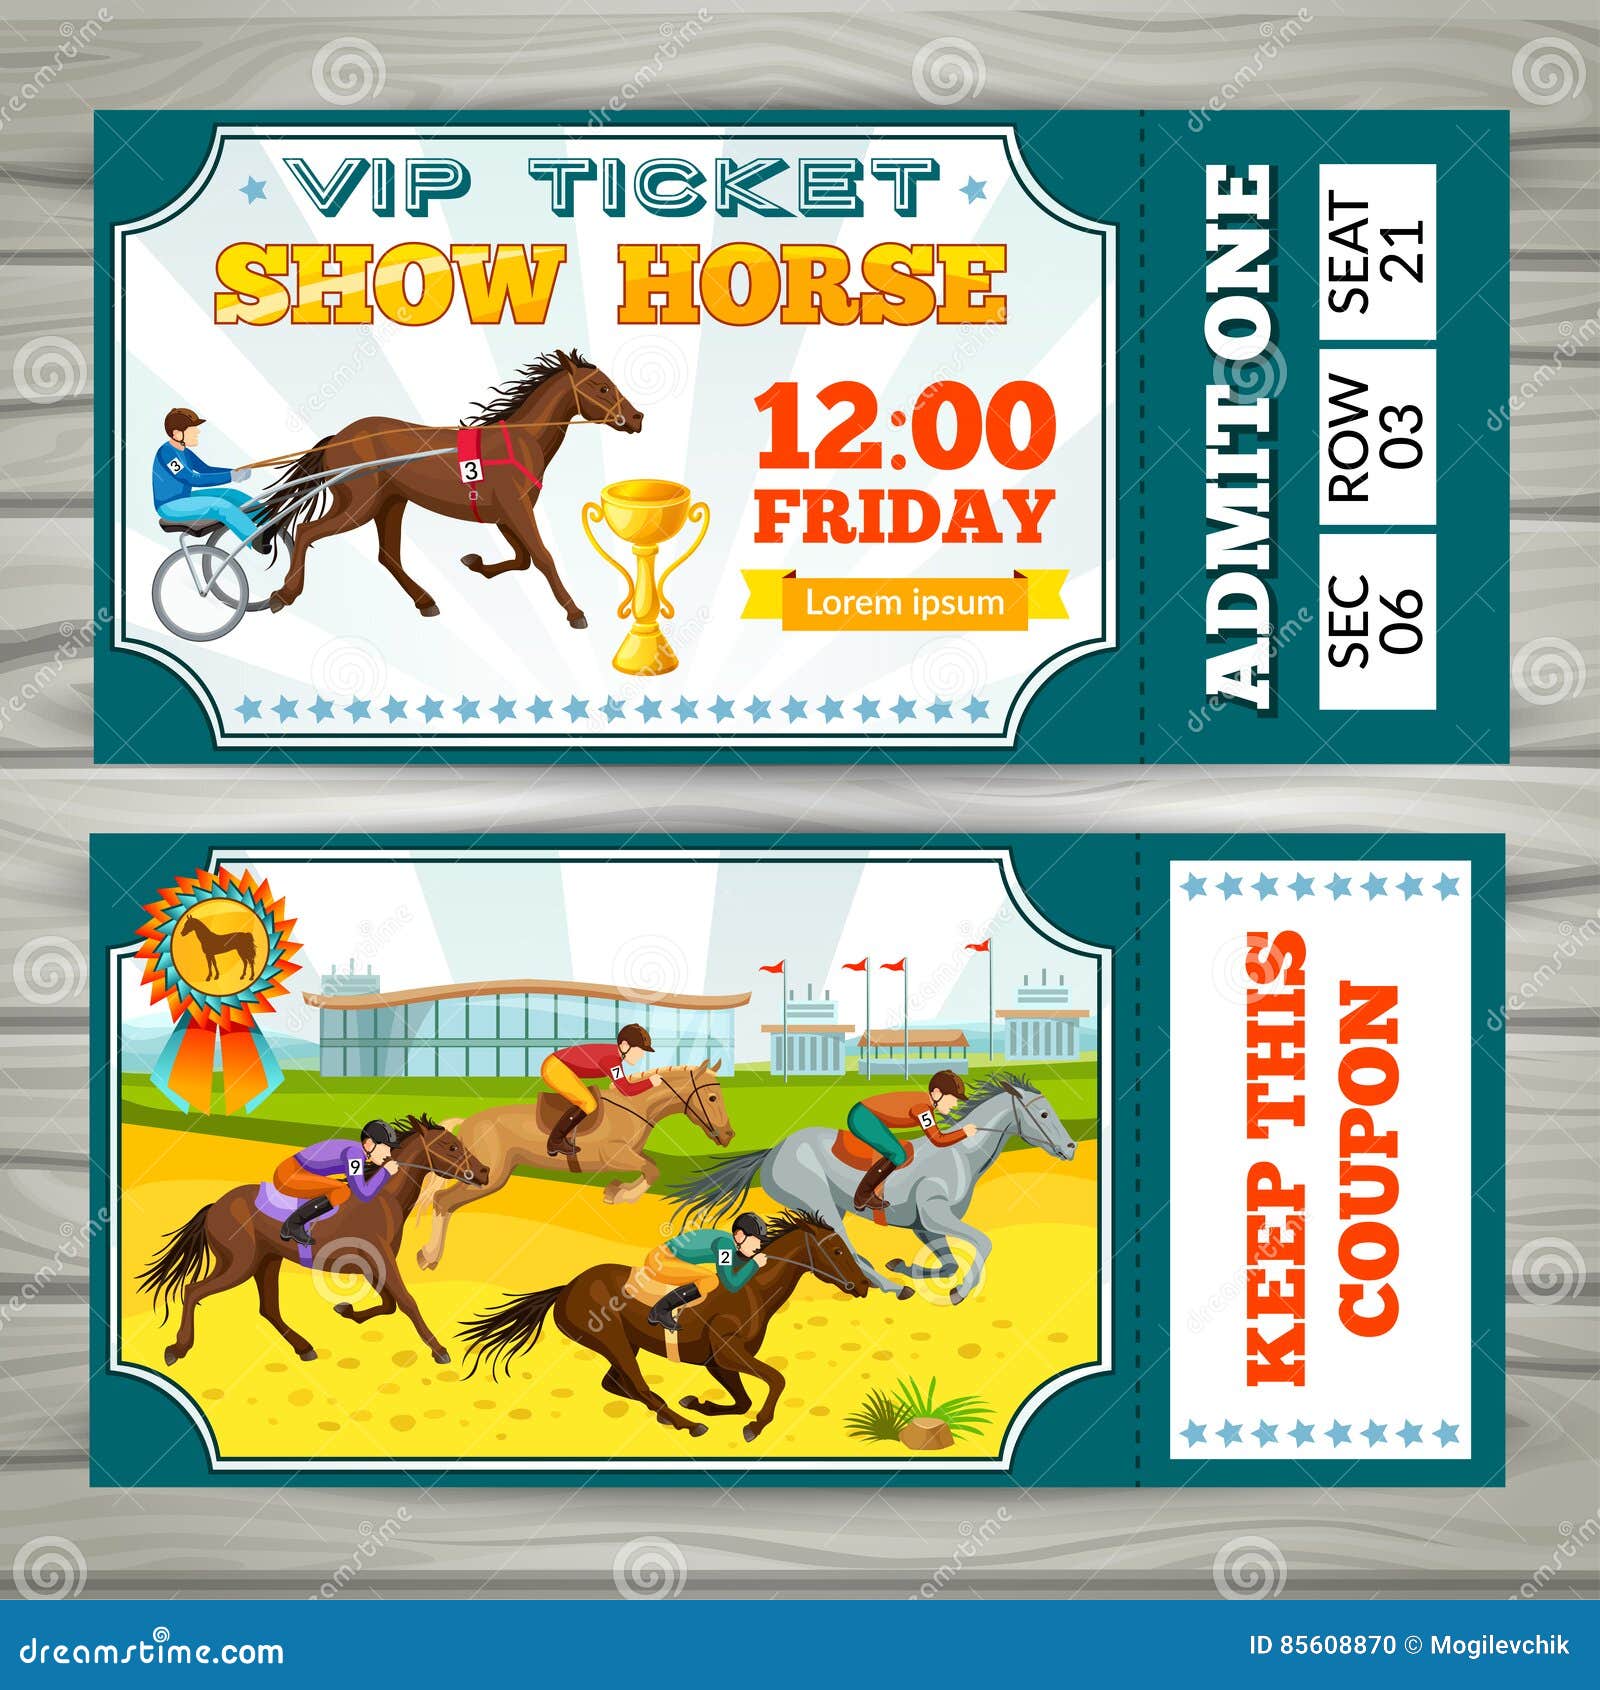 Equestrian Show Pass Tickets Stock Vector Illustration of cartoon